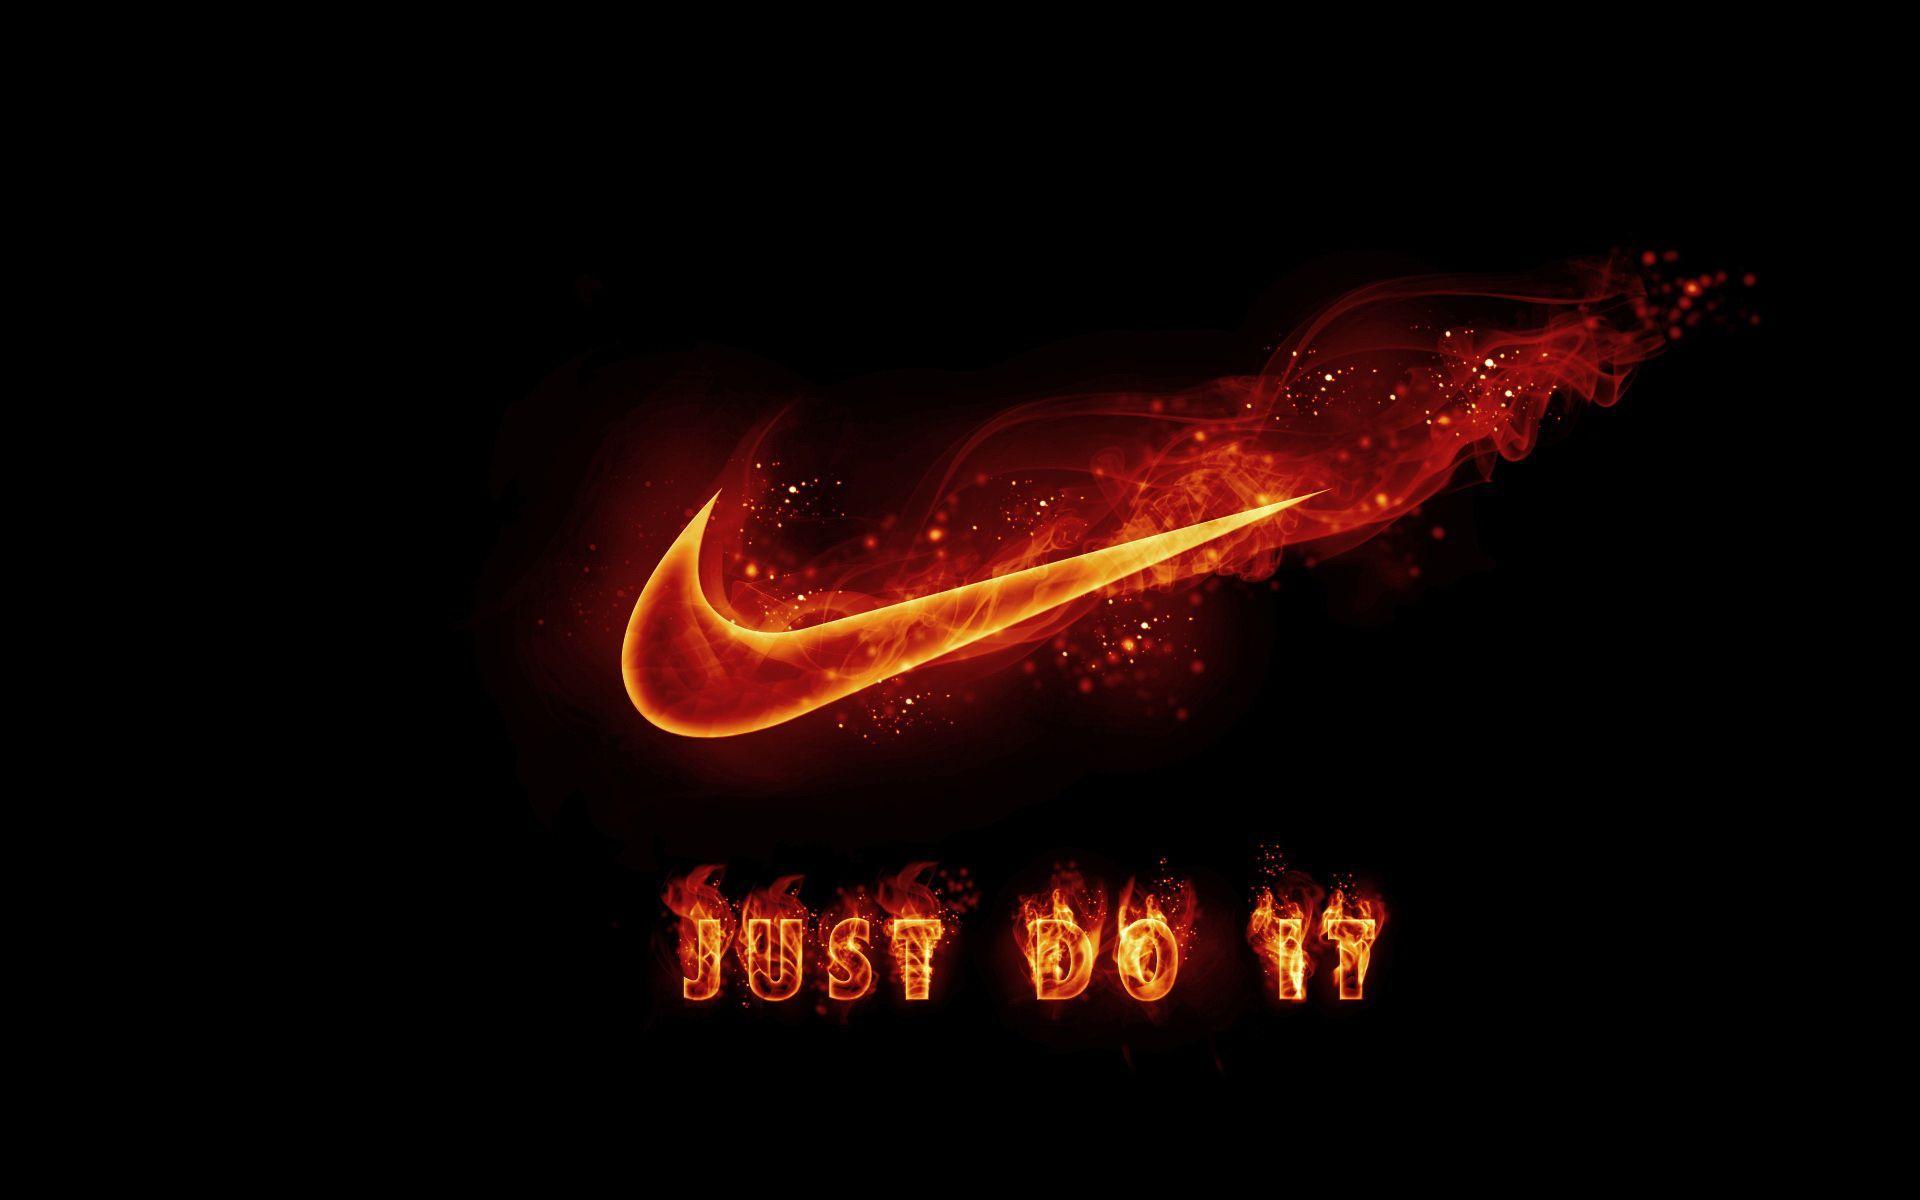 Cool Red Nike Logo - Pin by Harry Potterfan on Fun Webs in 2019 | Cool nike logos, Nike ...